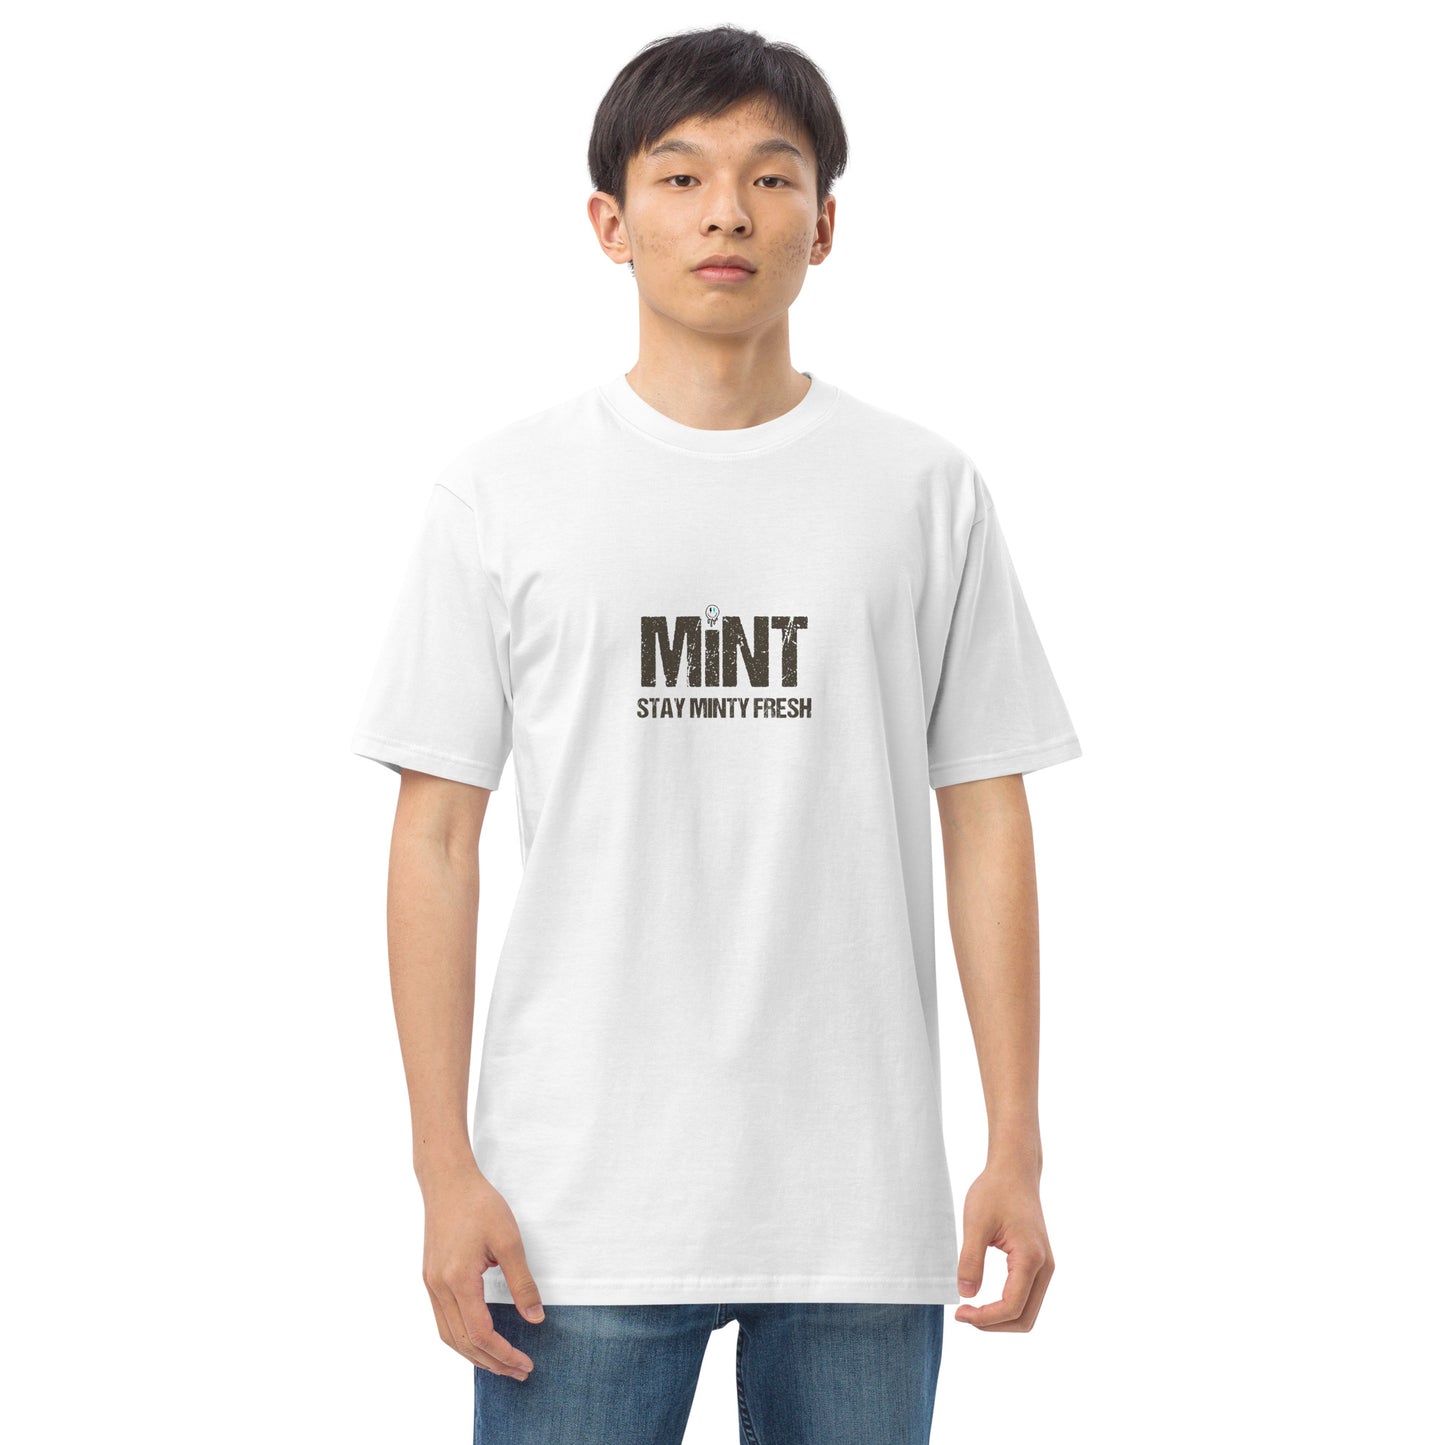 Stay Minty Fresh Shirt